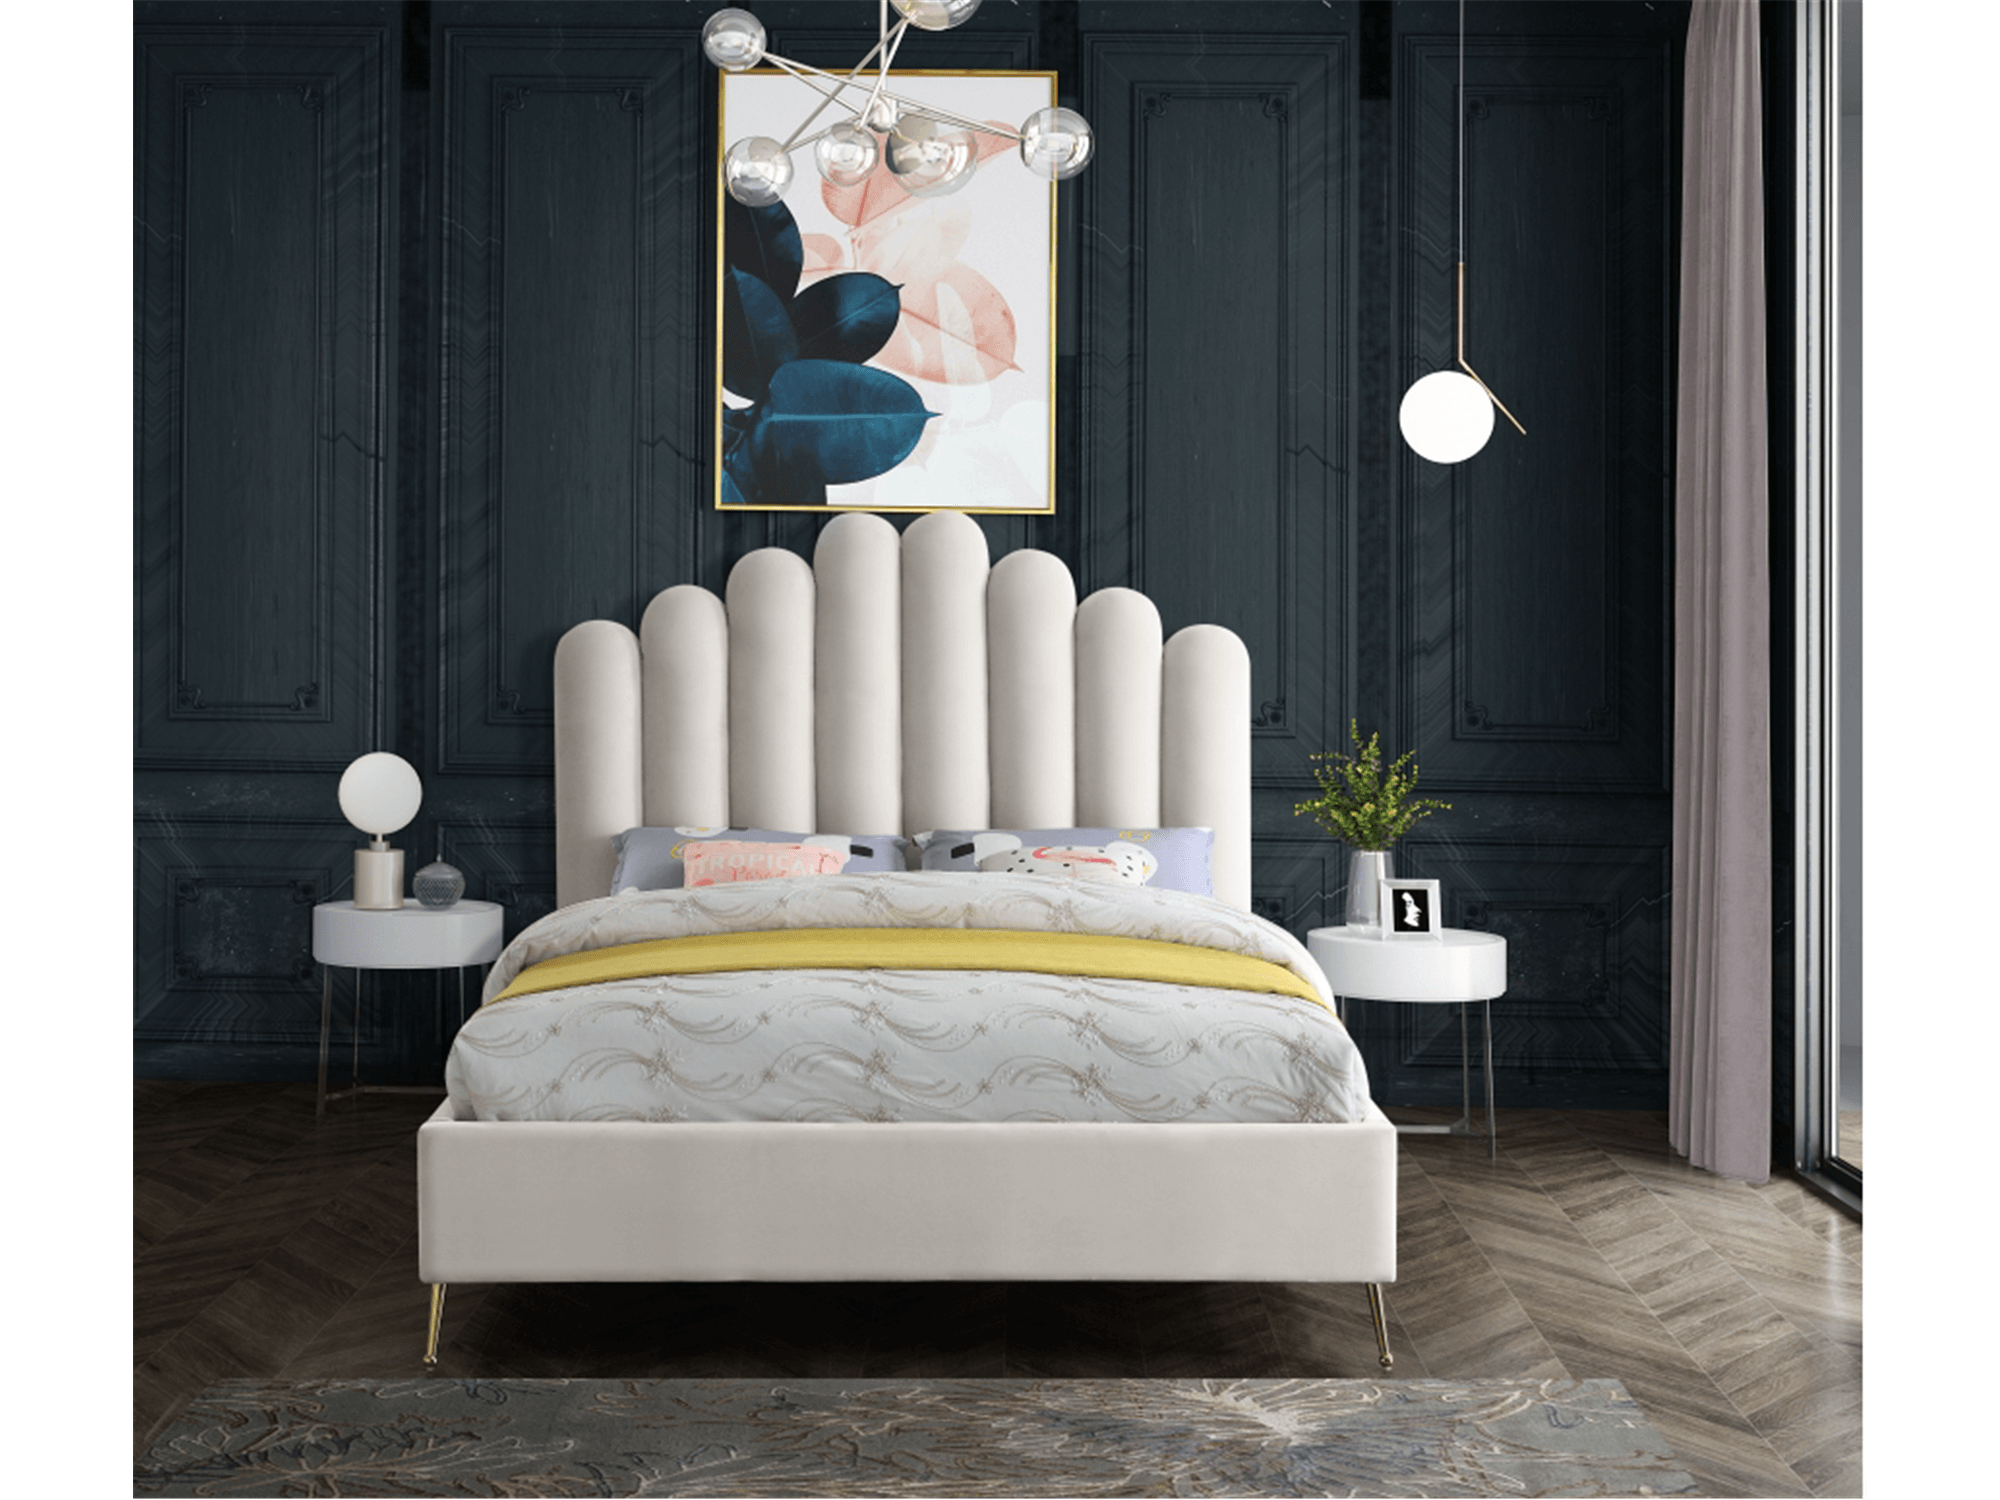 Lulu queen bed - Euro Living Furniture